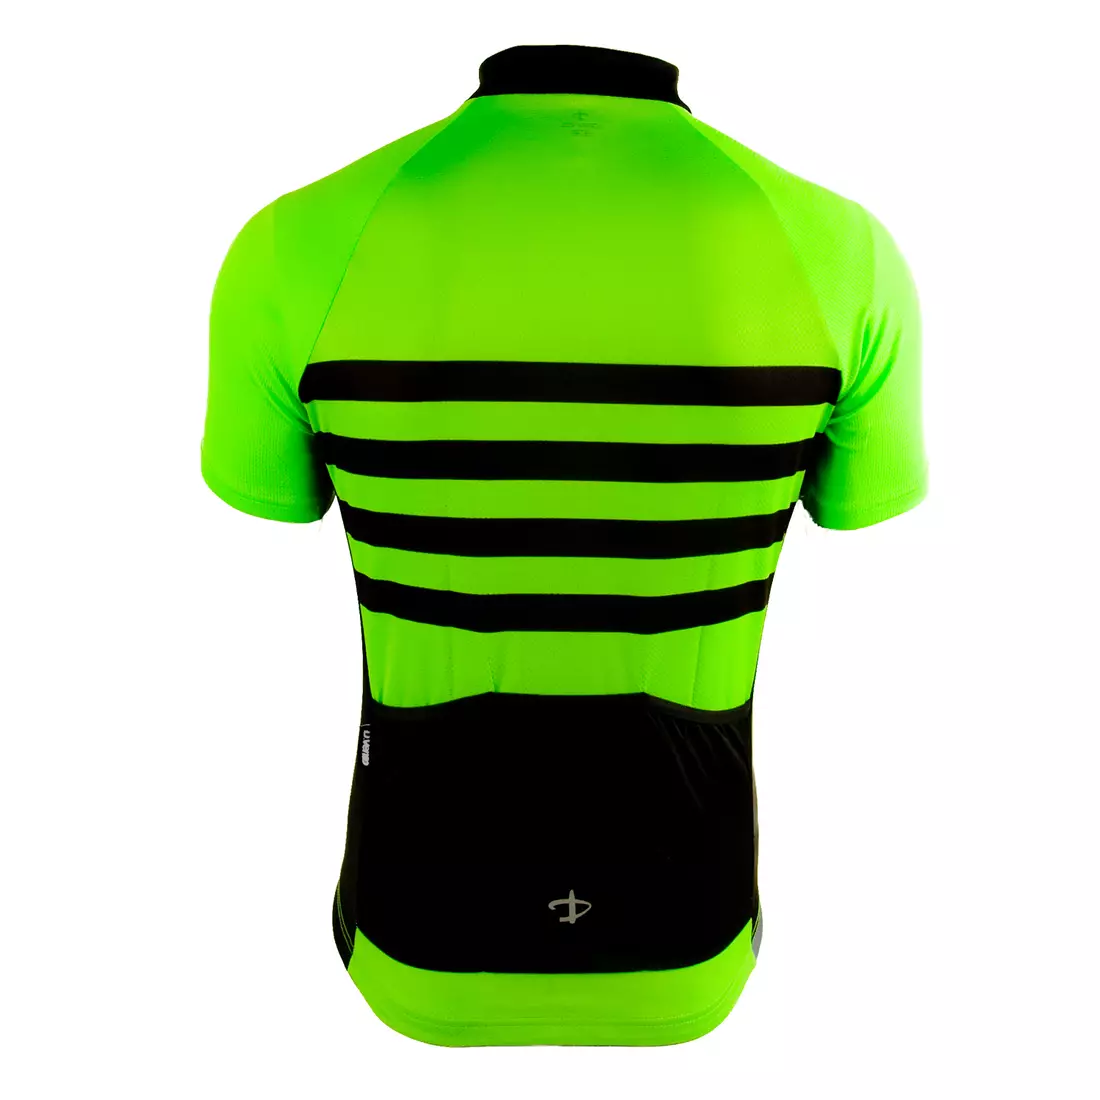 DEKO DK-1018-003 Zeleno-čierny cyklistický dres